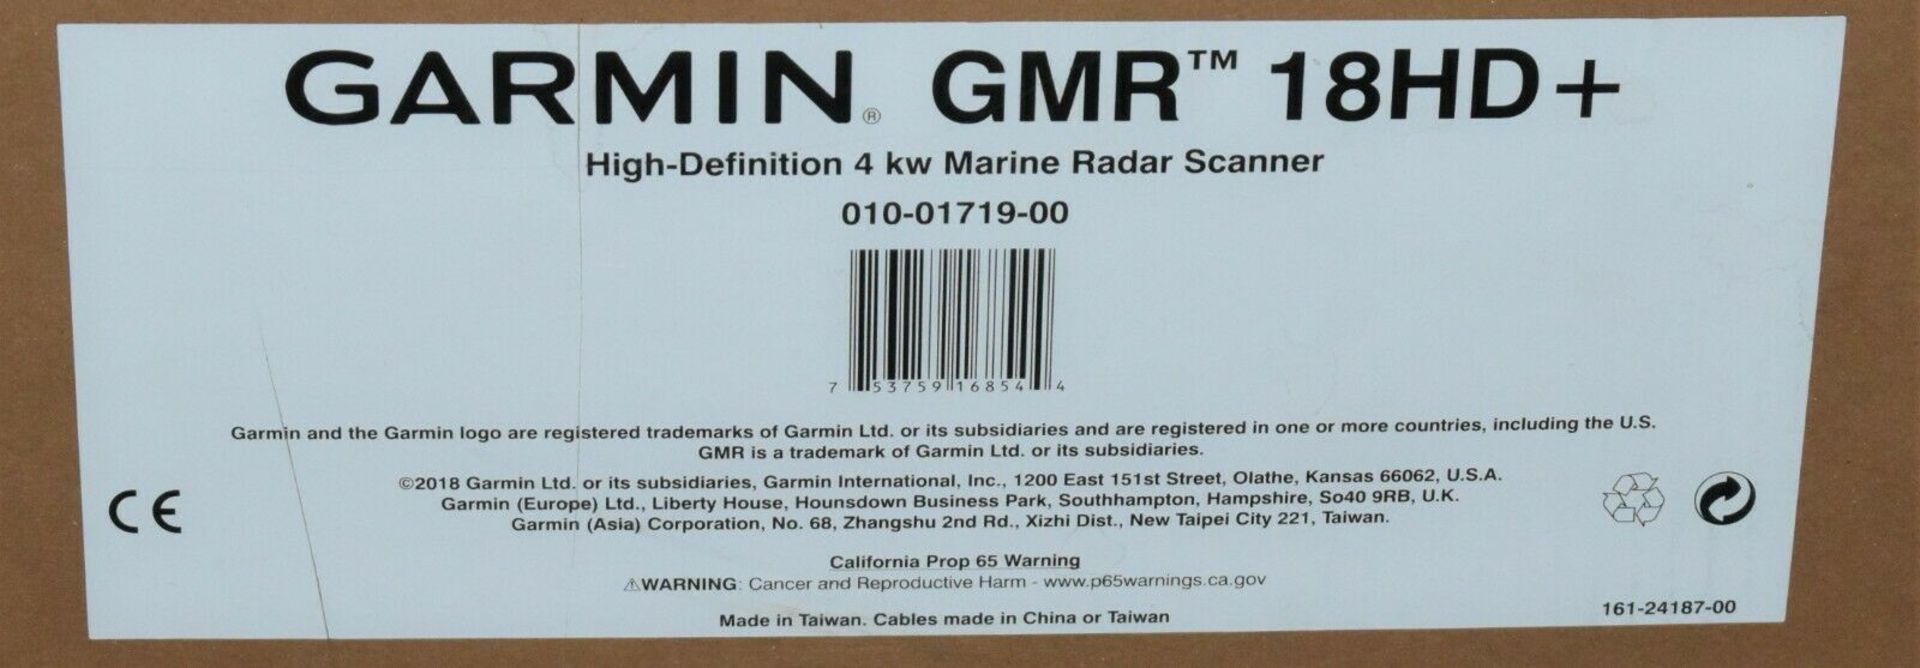 1 x Garmin GMR 18 HD+ Radome Compact Dome Dynamic Radar (18" - 4 kW) - Model Number 010-01719-00 - - Image 3 of 5